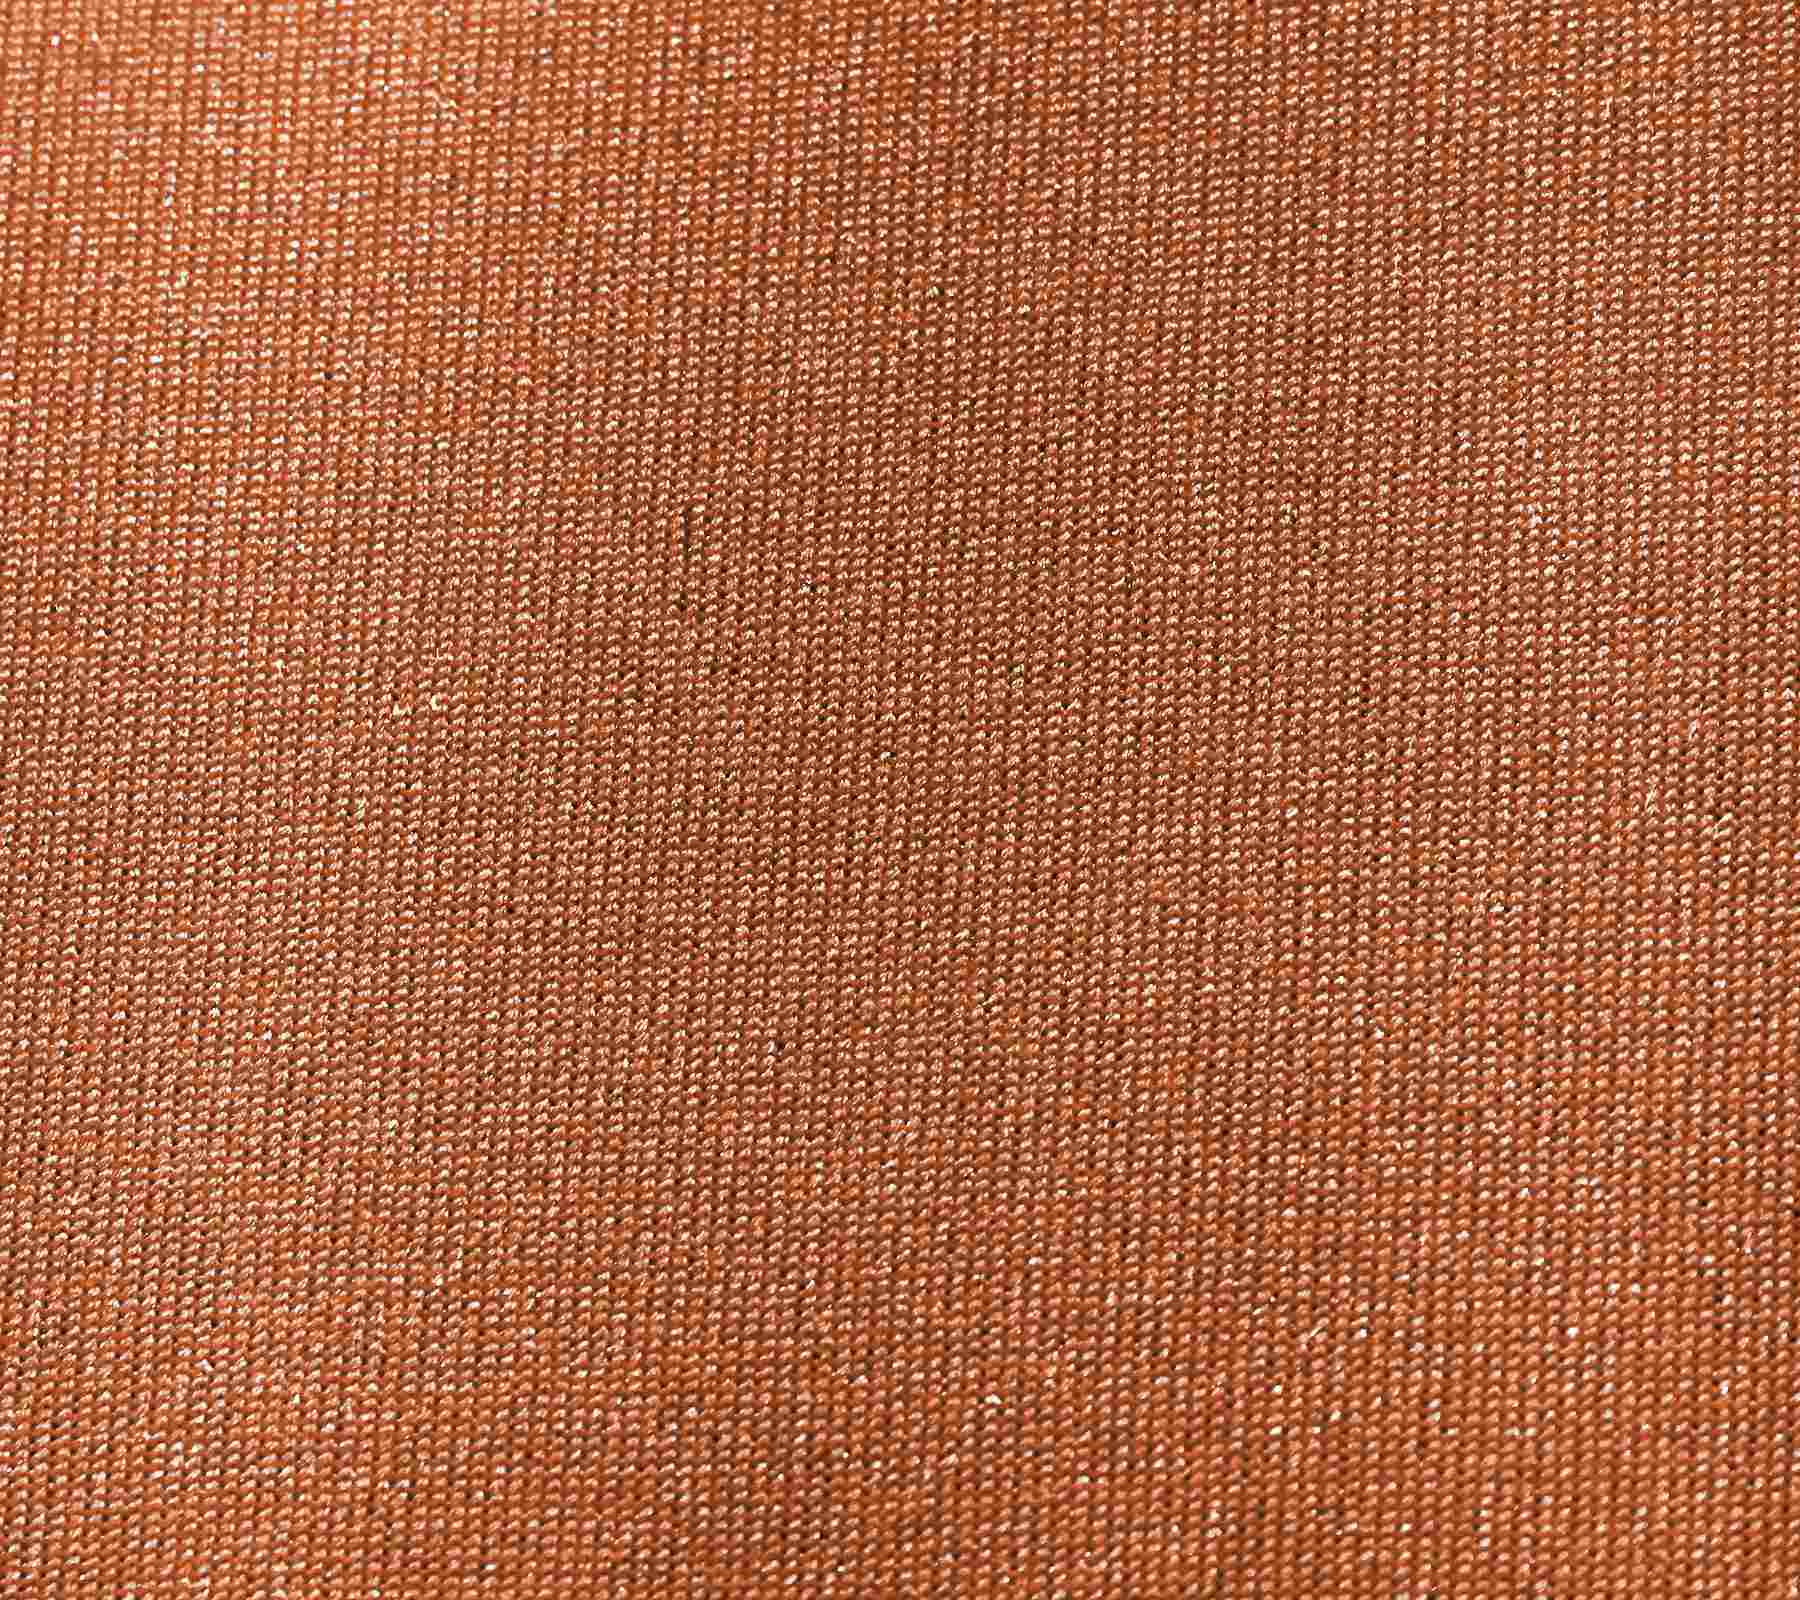 Orange Woven Nylon Fabric Background Image, Wallpaper or Texture free ...